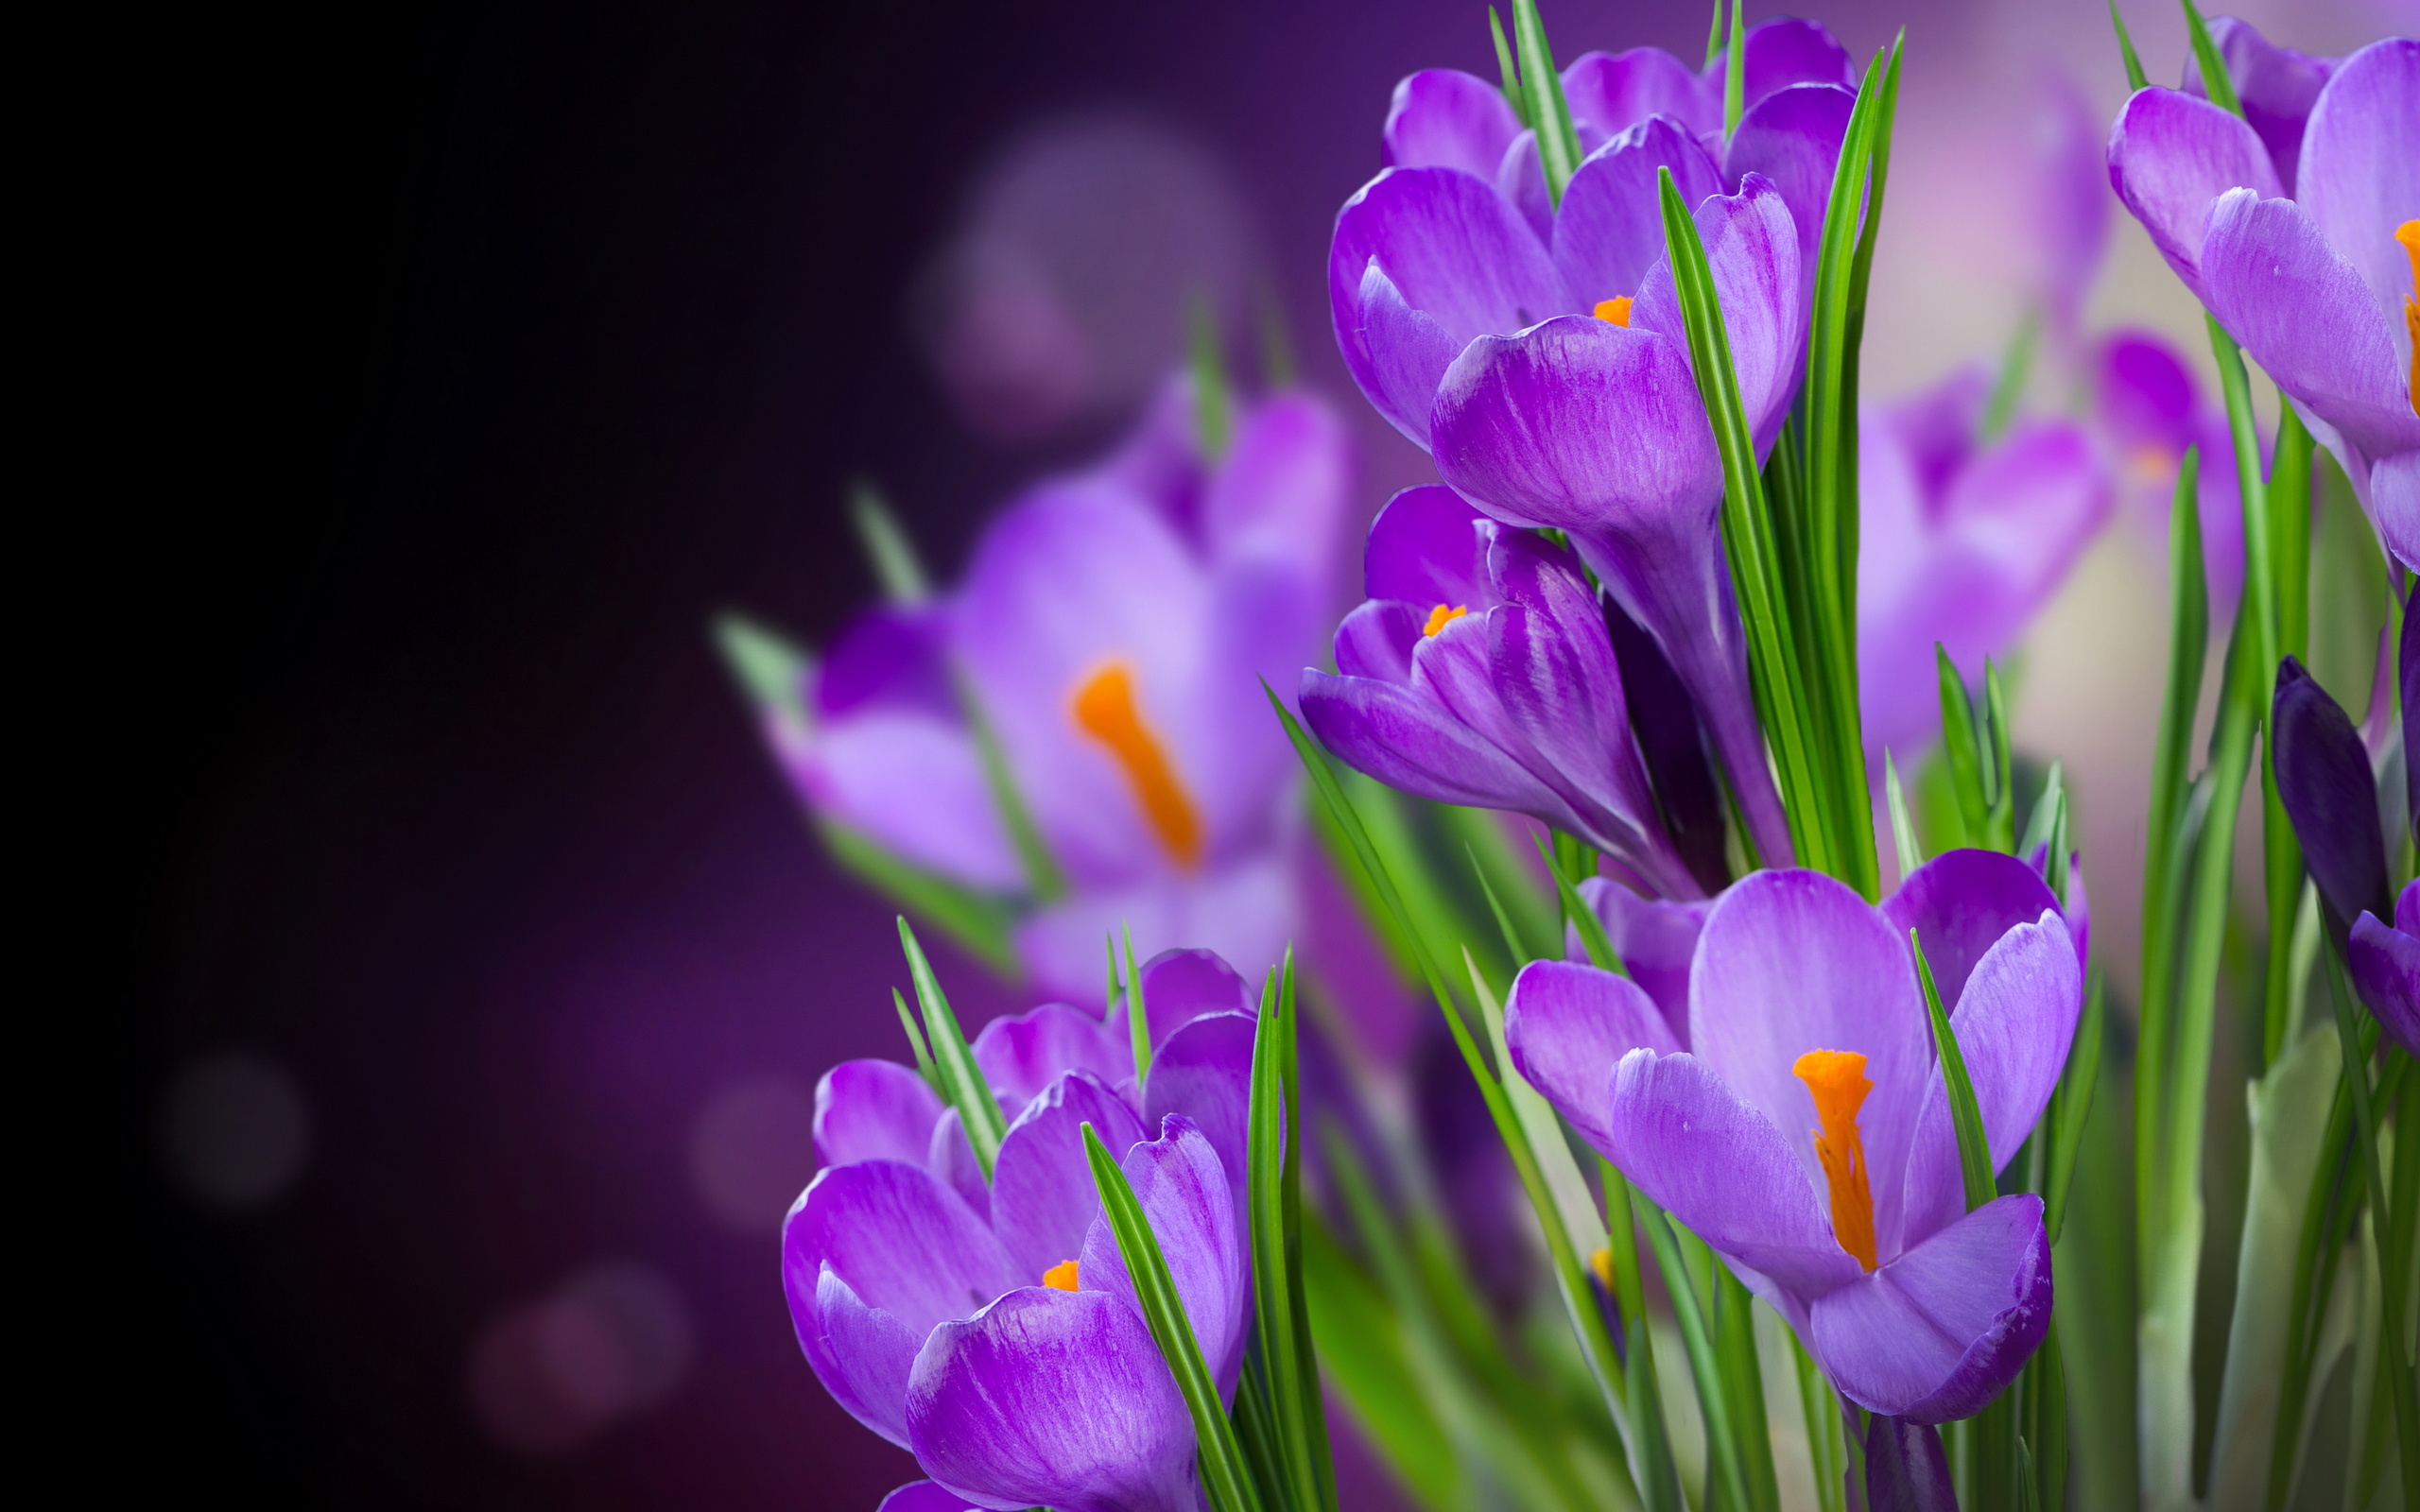 290888 descargar imagen azafrán, tierra/naturaleza, flor, flor purpura, flores: fondos de pantalla y protectores de pantalla gratis